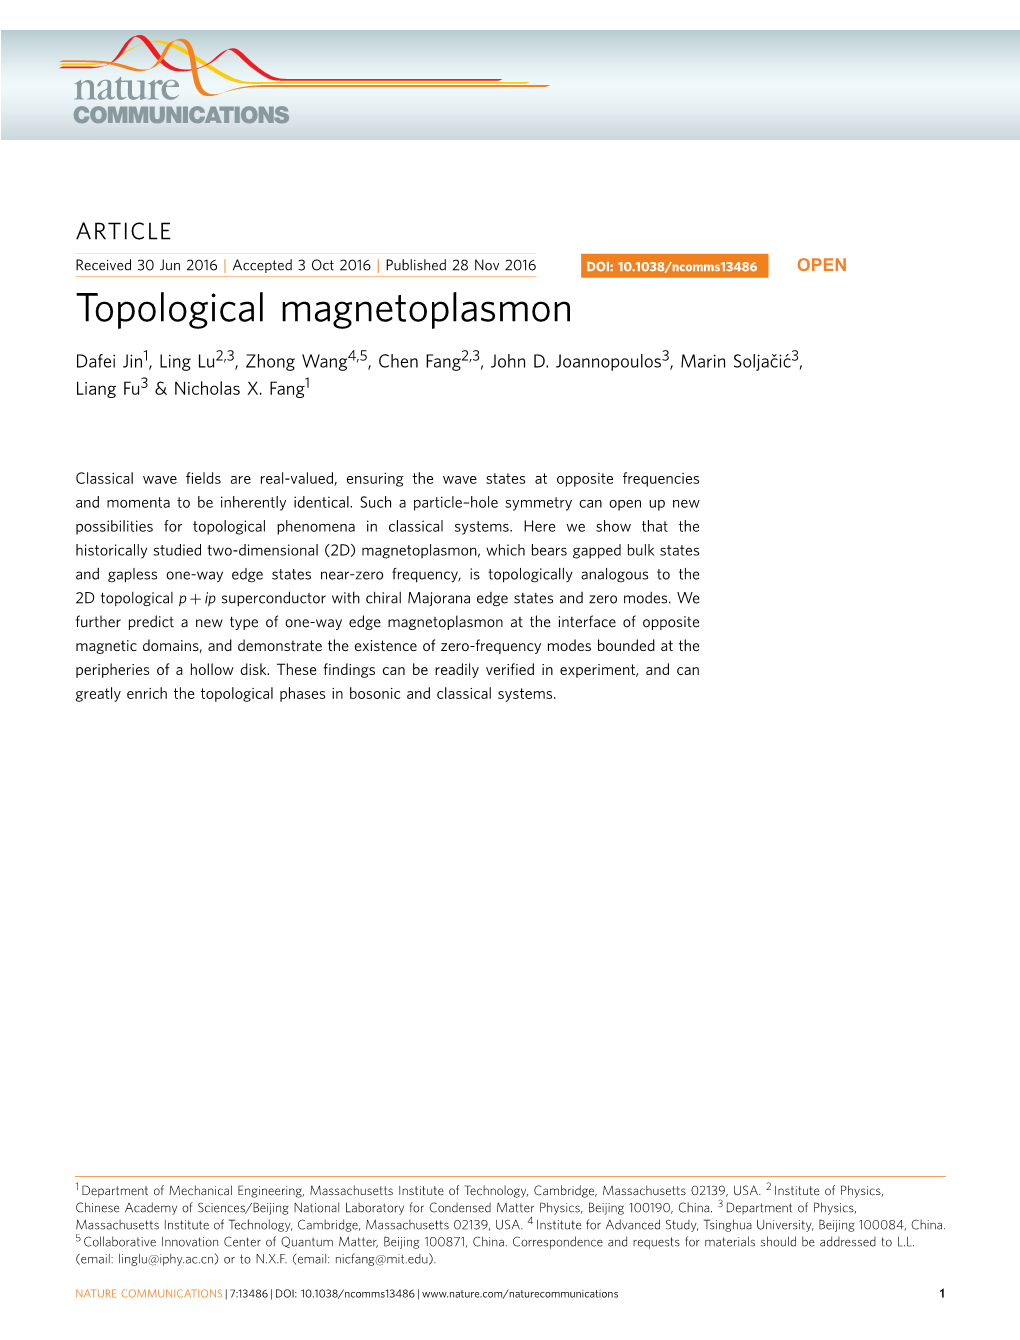 Topological Magnetoplasmon